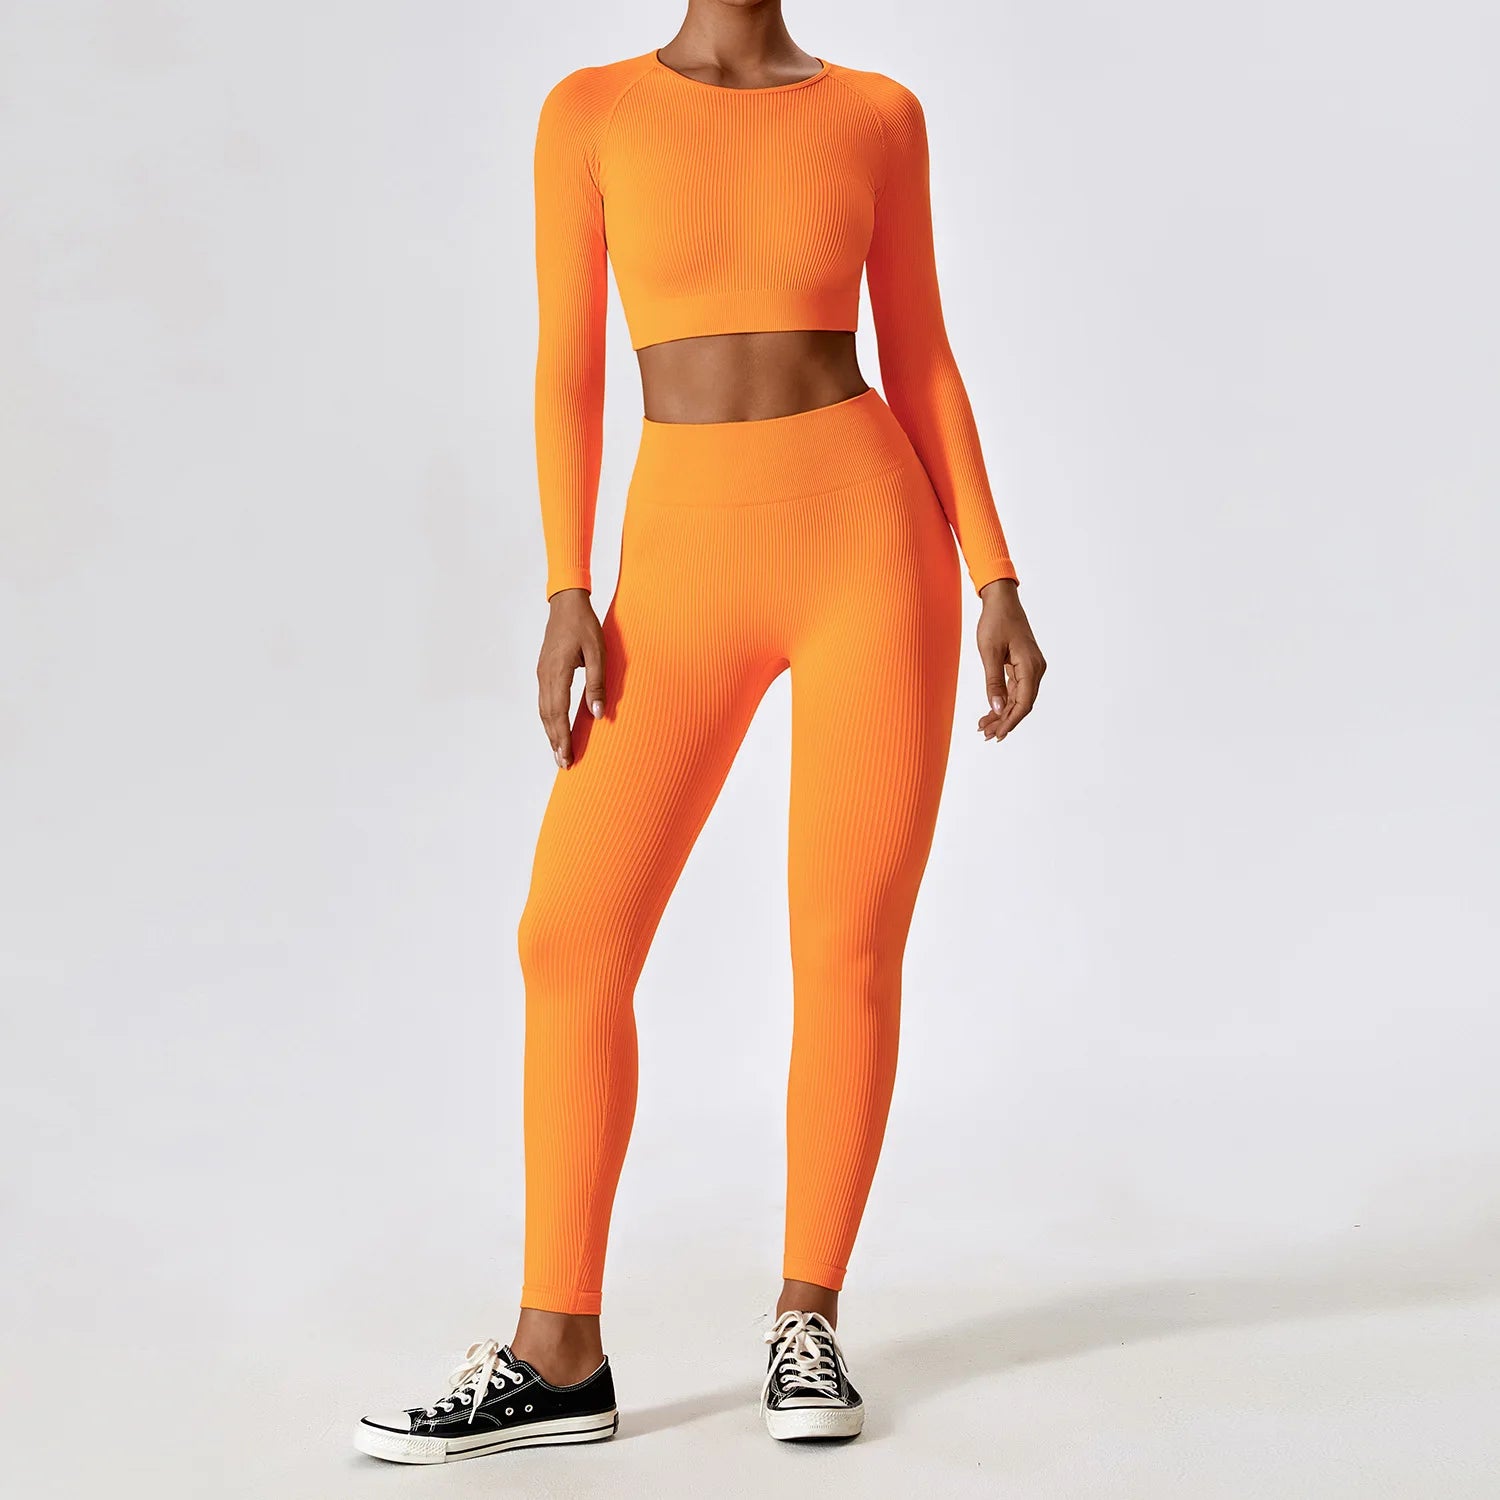 Ribbed Yoga Set Women Workout Sportswear Gym Clothing Fitness Long